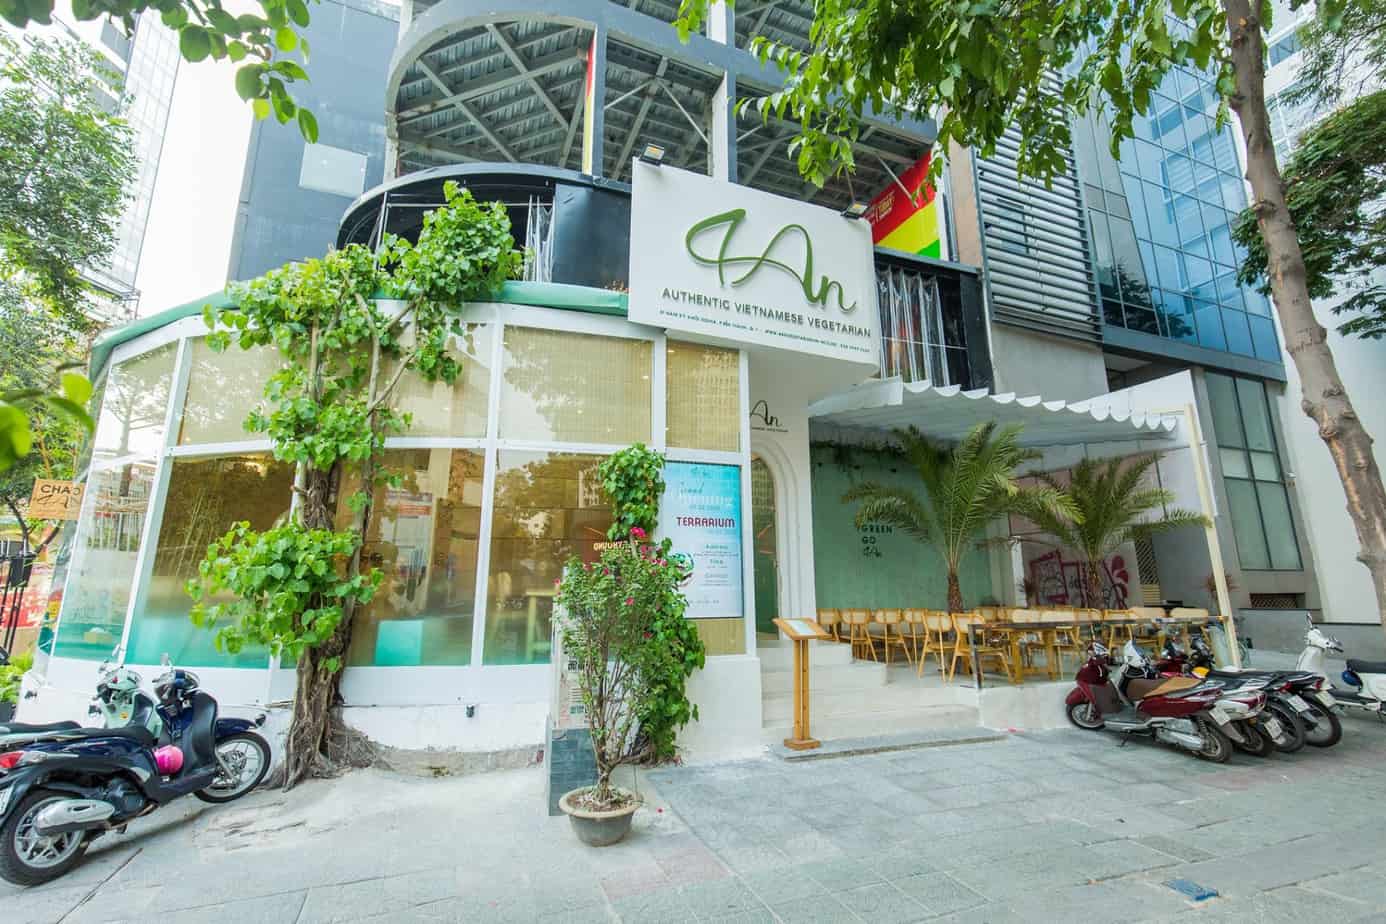 - Vegetarian Restaurant 4An Vegetarian (61 Nam Ky Khoi Nghia, Ben Thanh Ward, District 1)